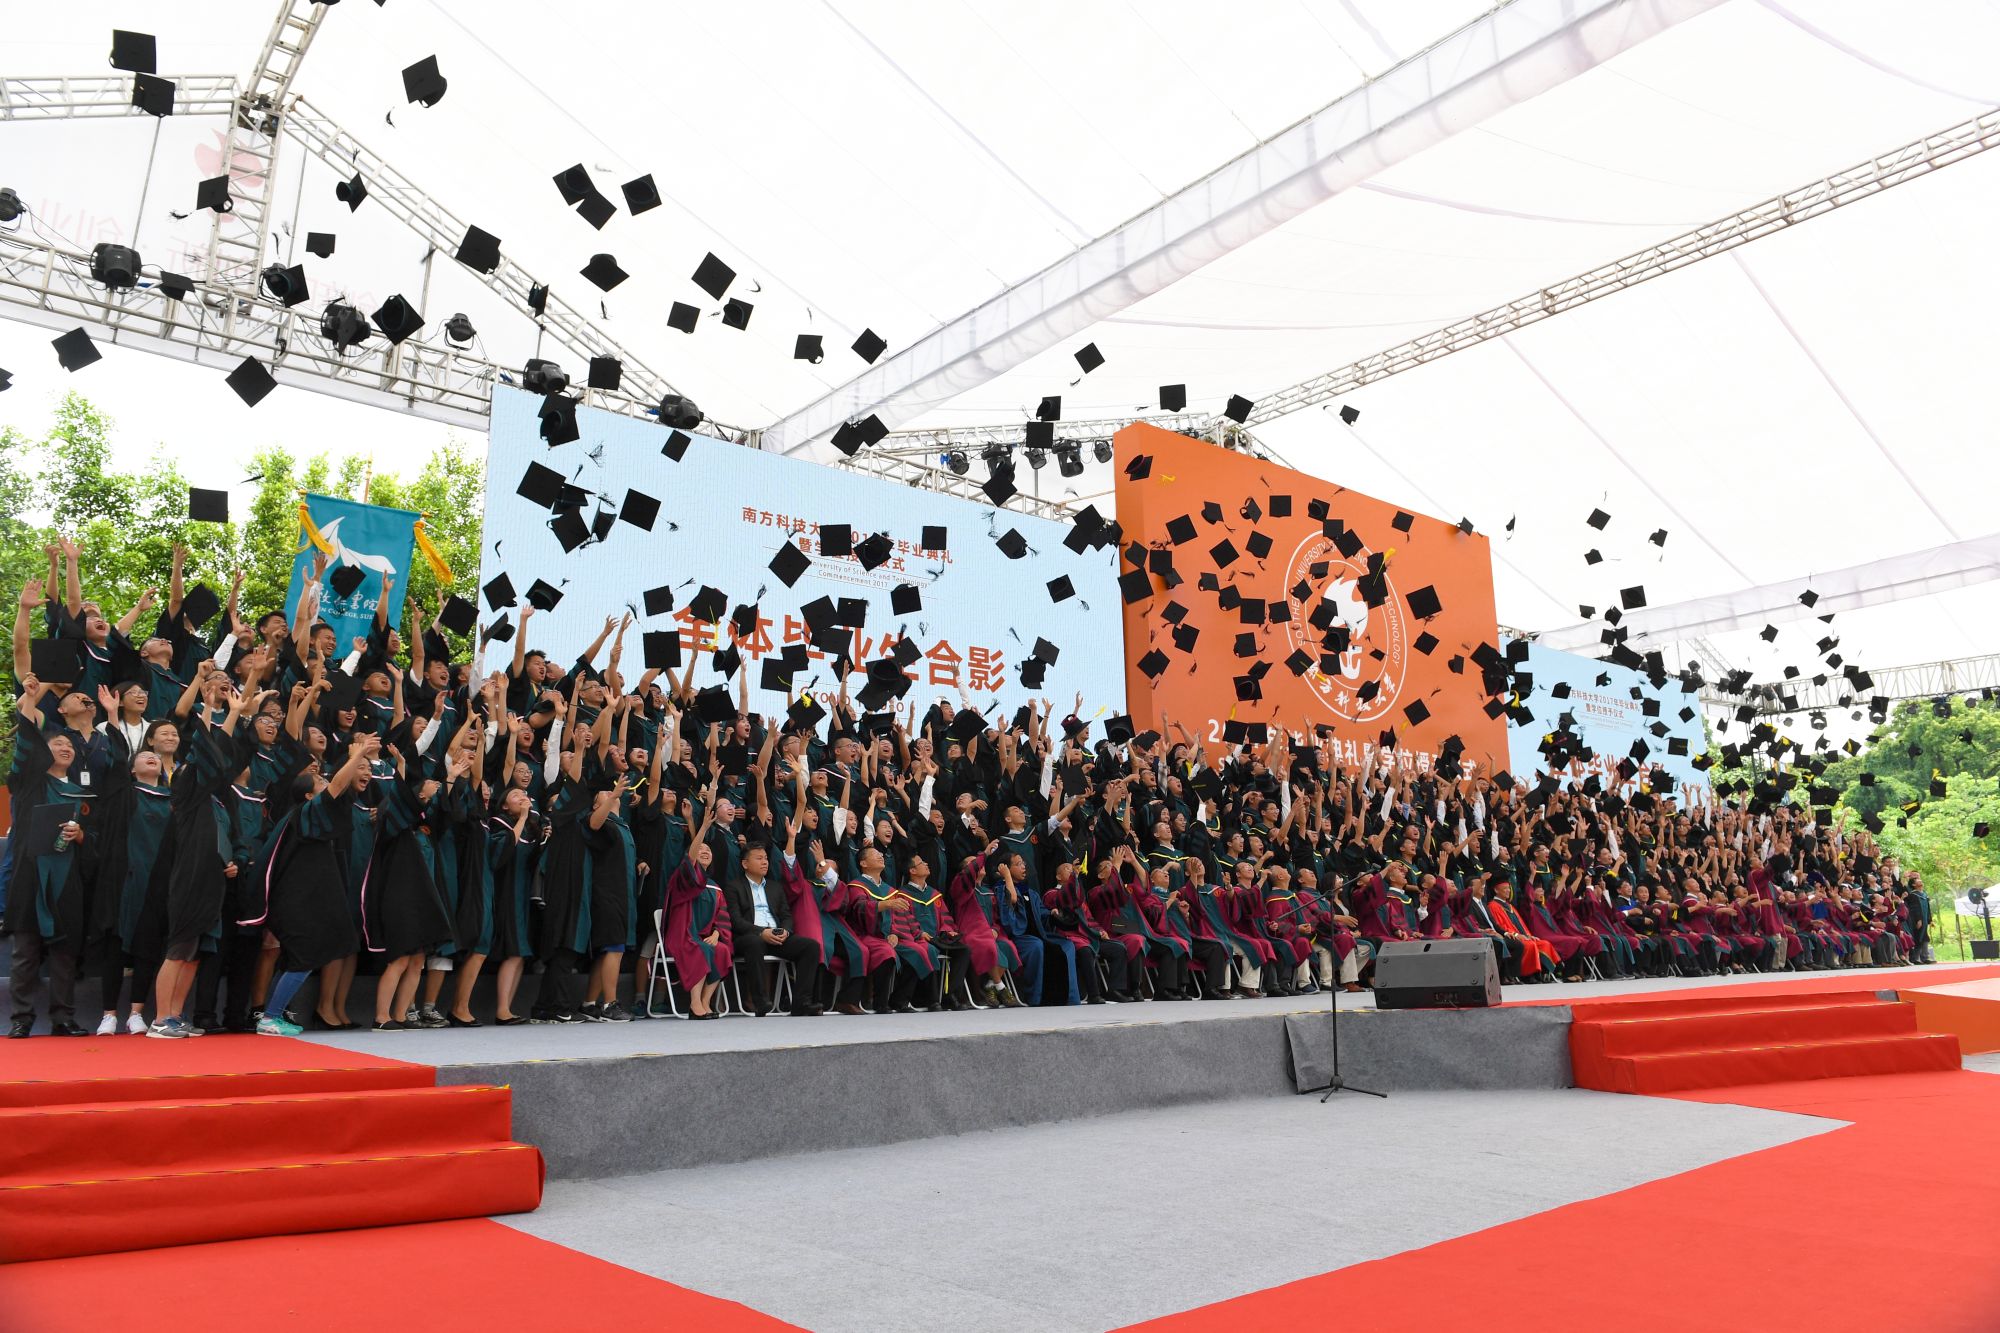 SUSTech University 2017 Commencement and Graduation Ceremony